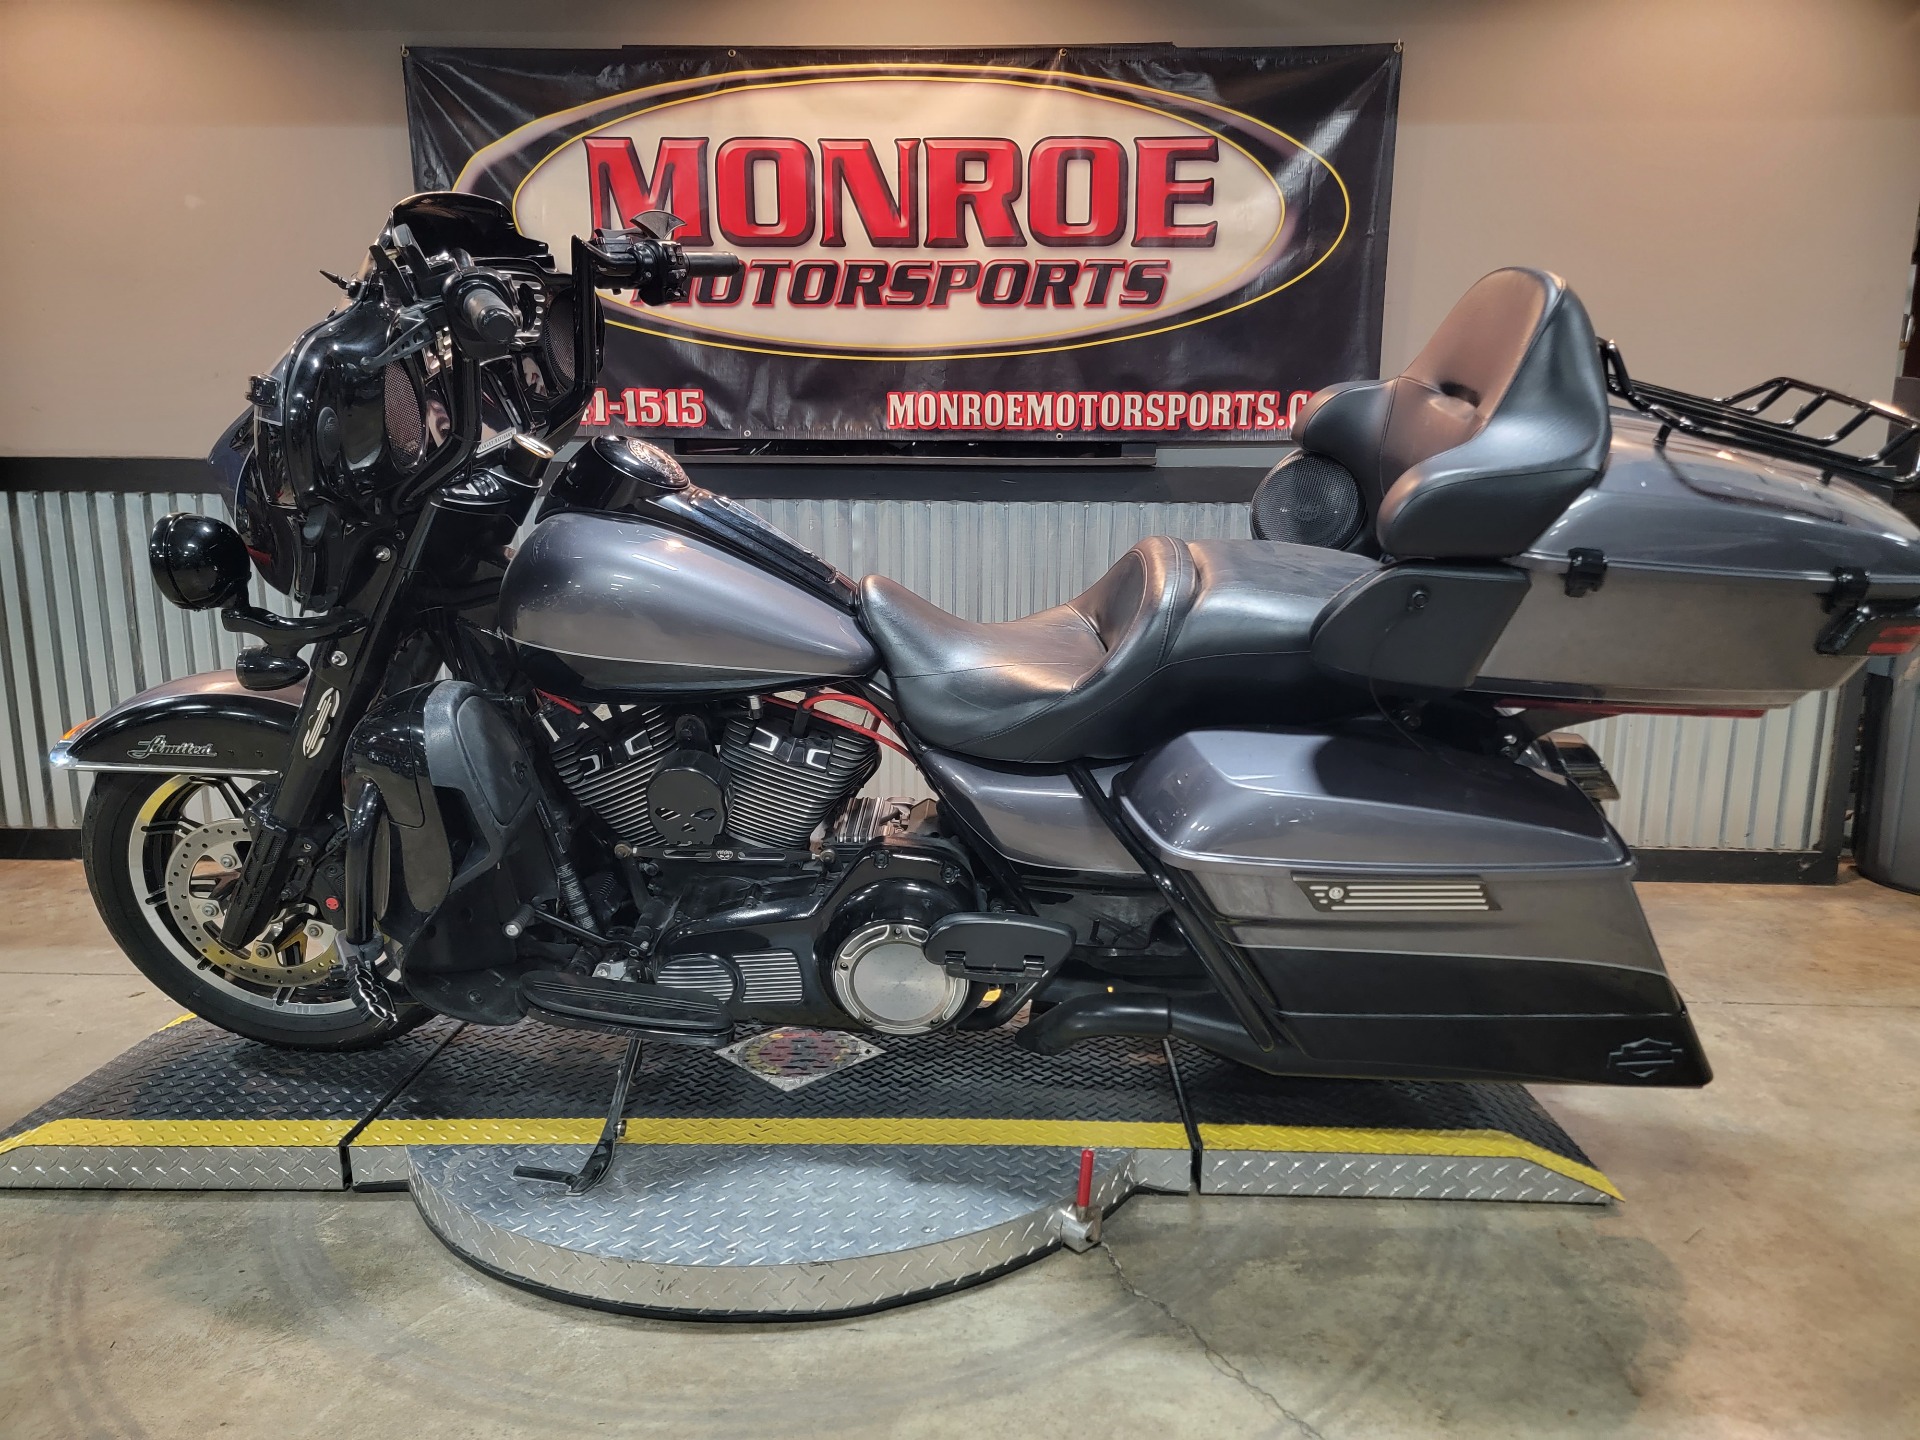 2014 Harley-Davidson Ultra Limited in Monroe, Michigan - Photo 2